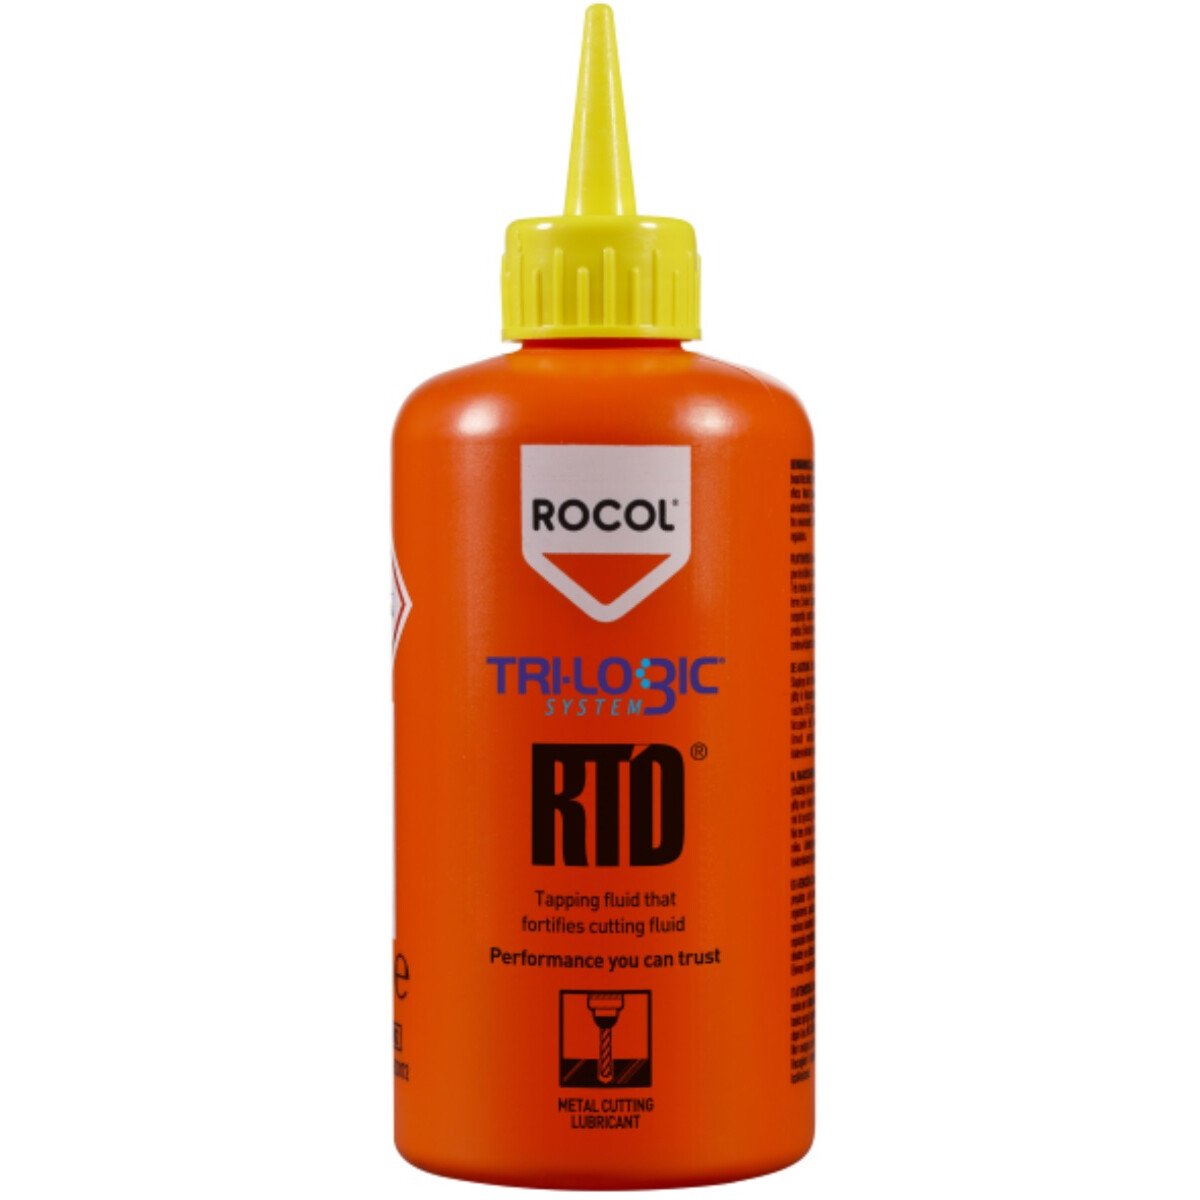 Rocol 53003 Tri-Logic RTD - Tapping Fluid That Fortifies Cutting Fluid 350ml (Carton of 12)